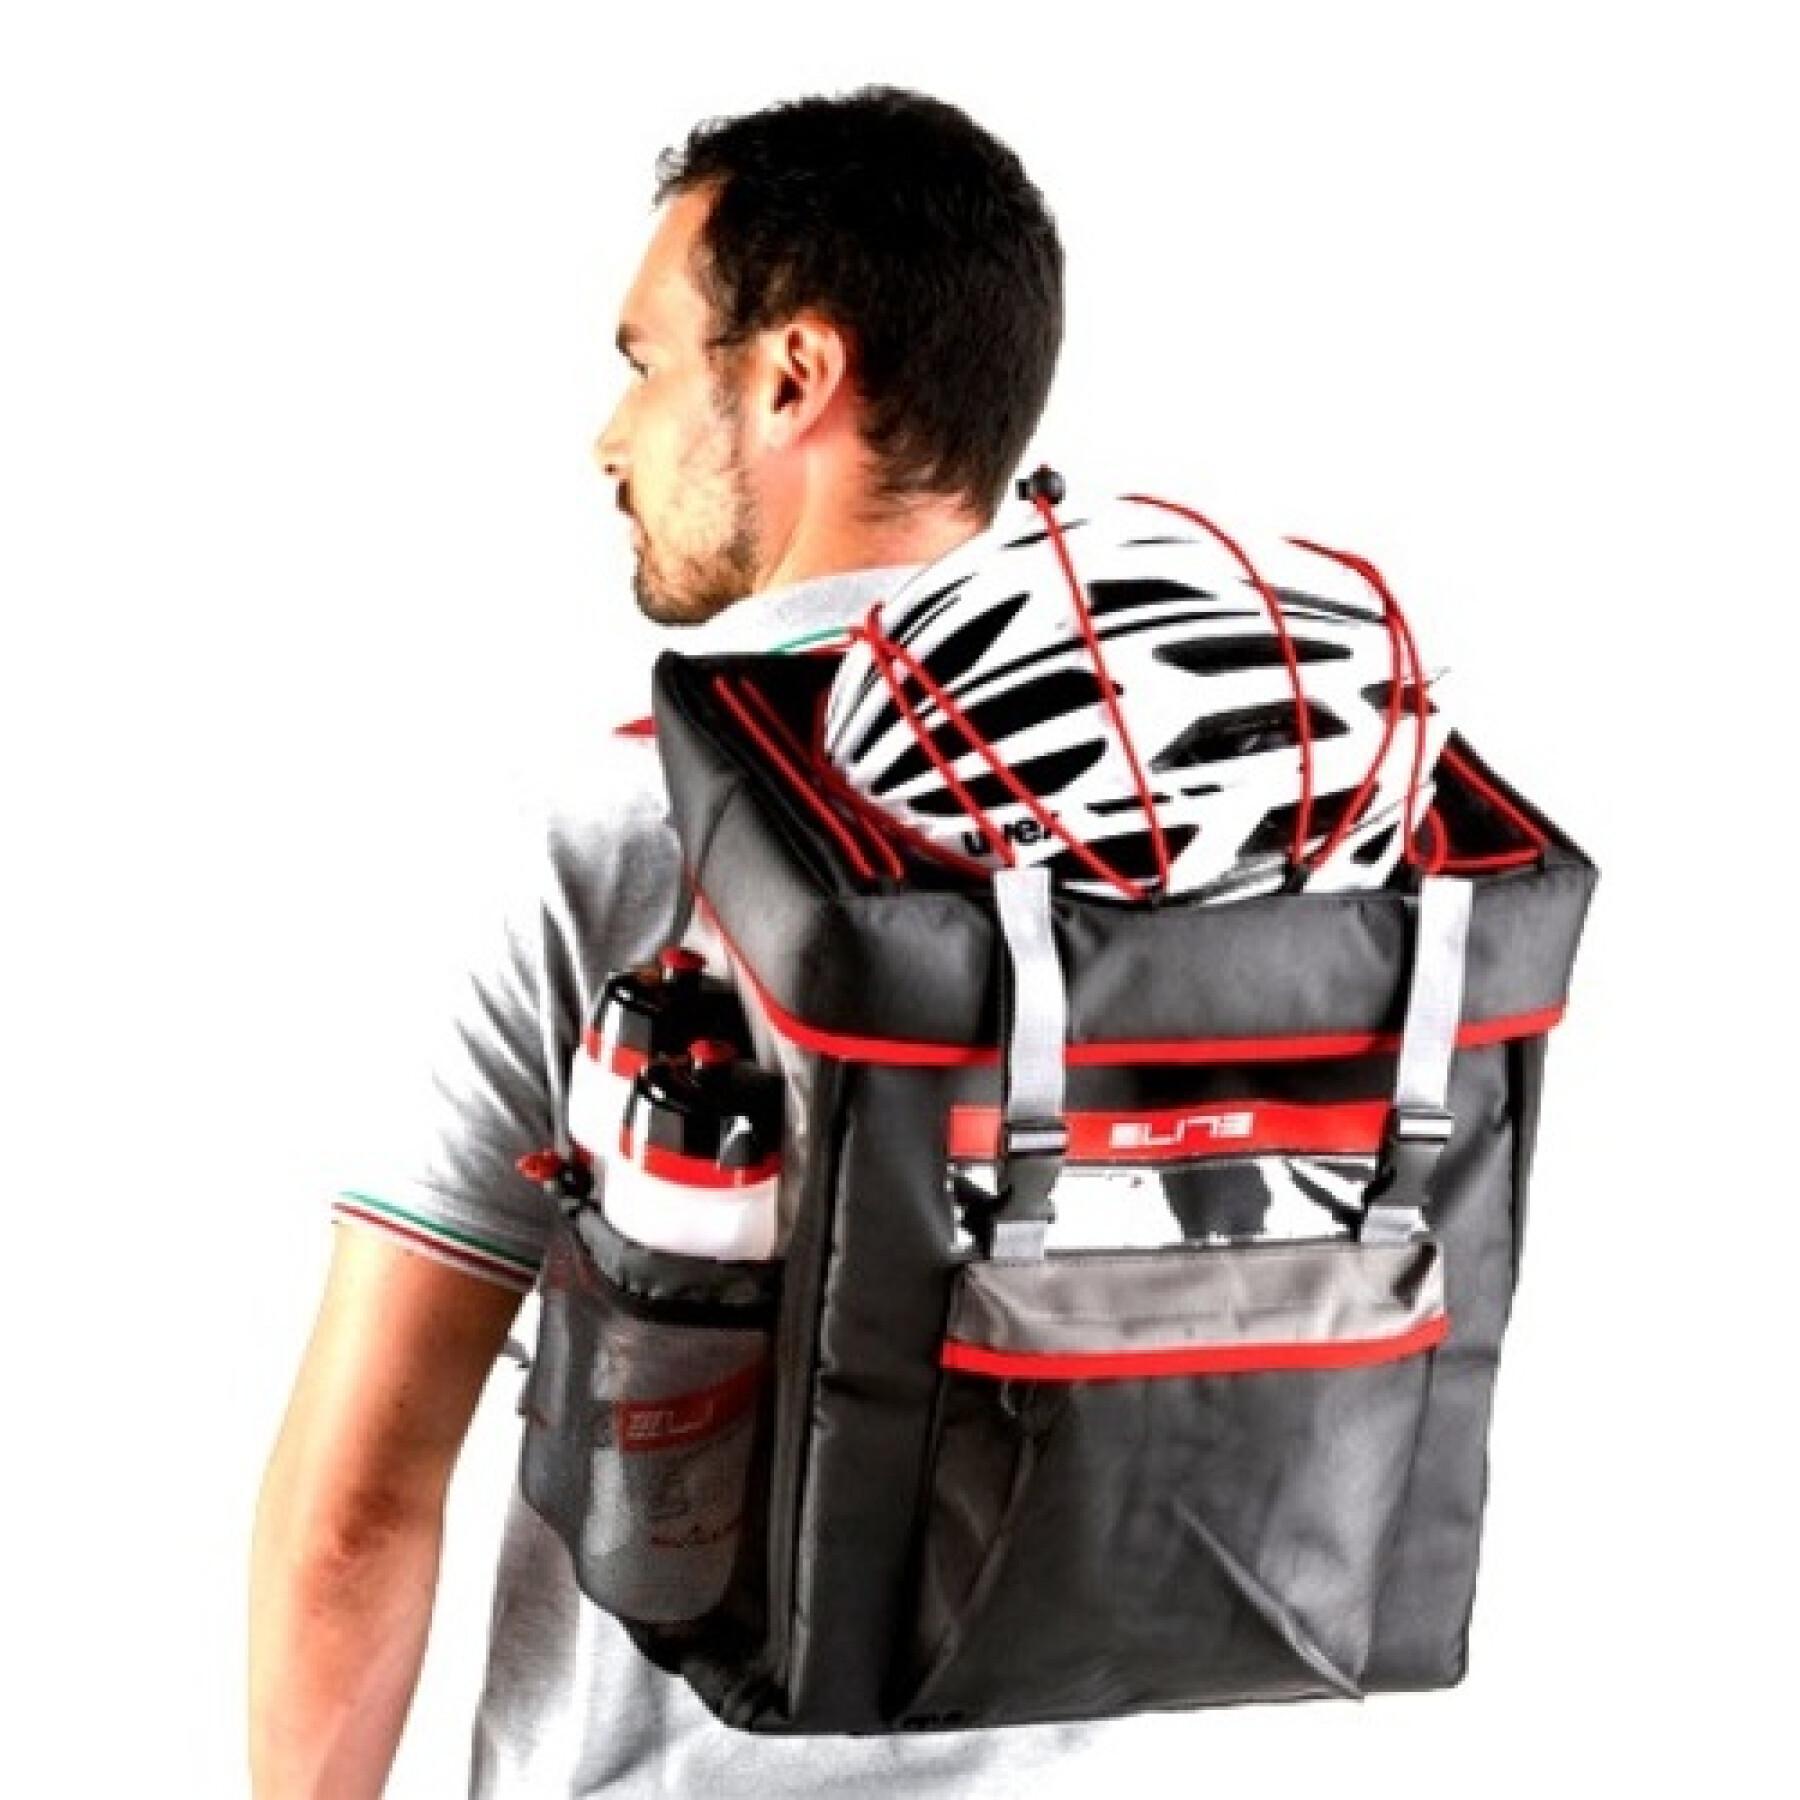 Special triathlon backpack Elite tri box